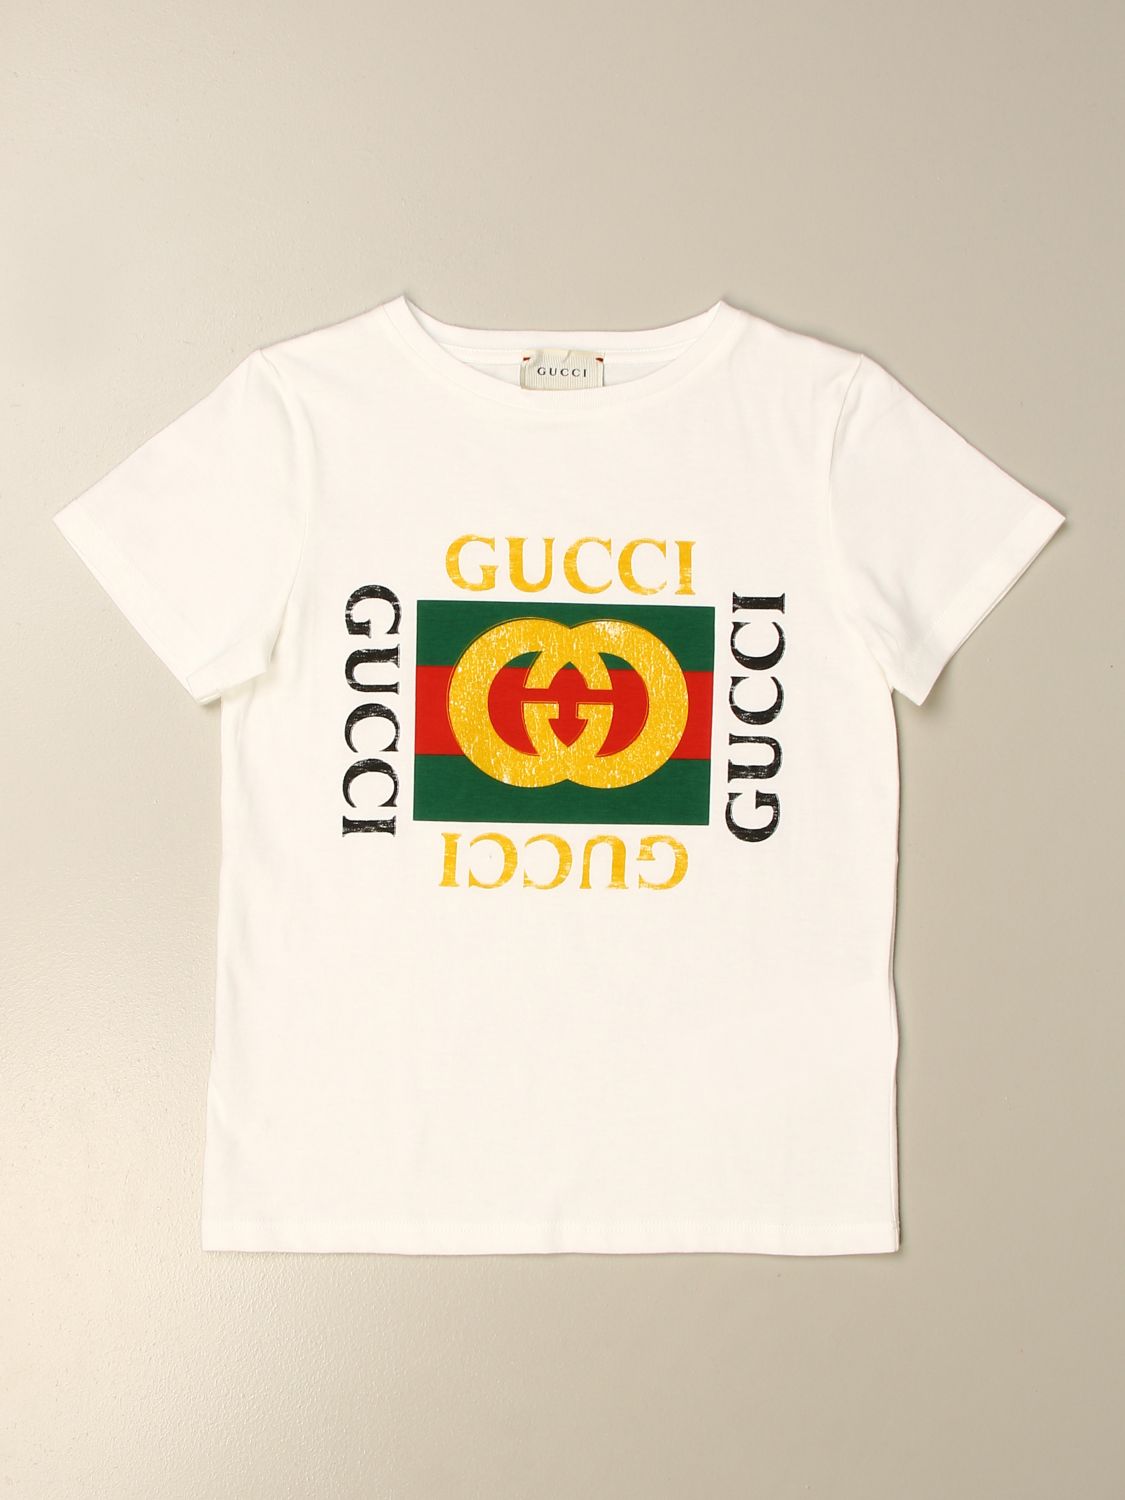 shirt of gucci